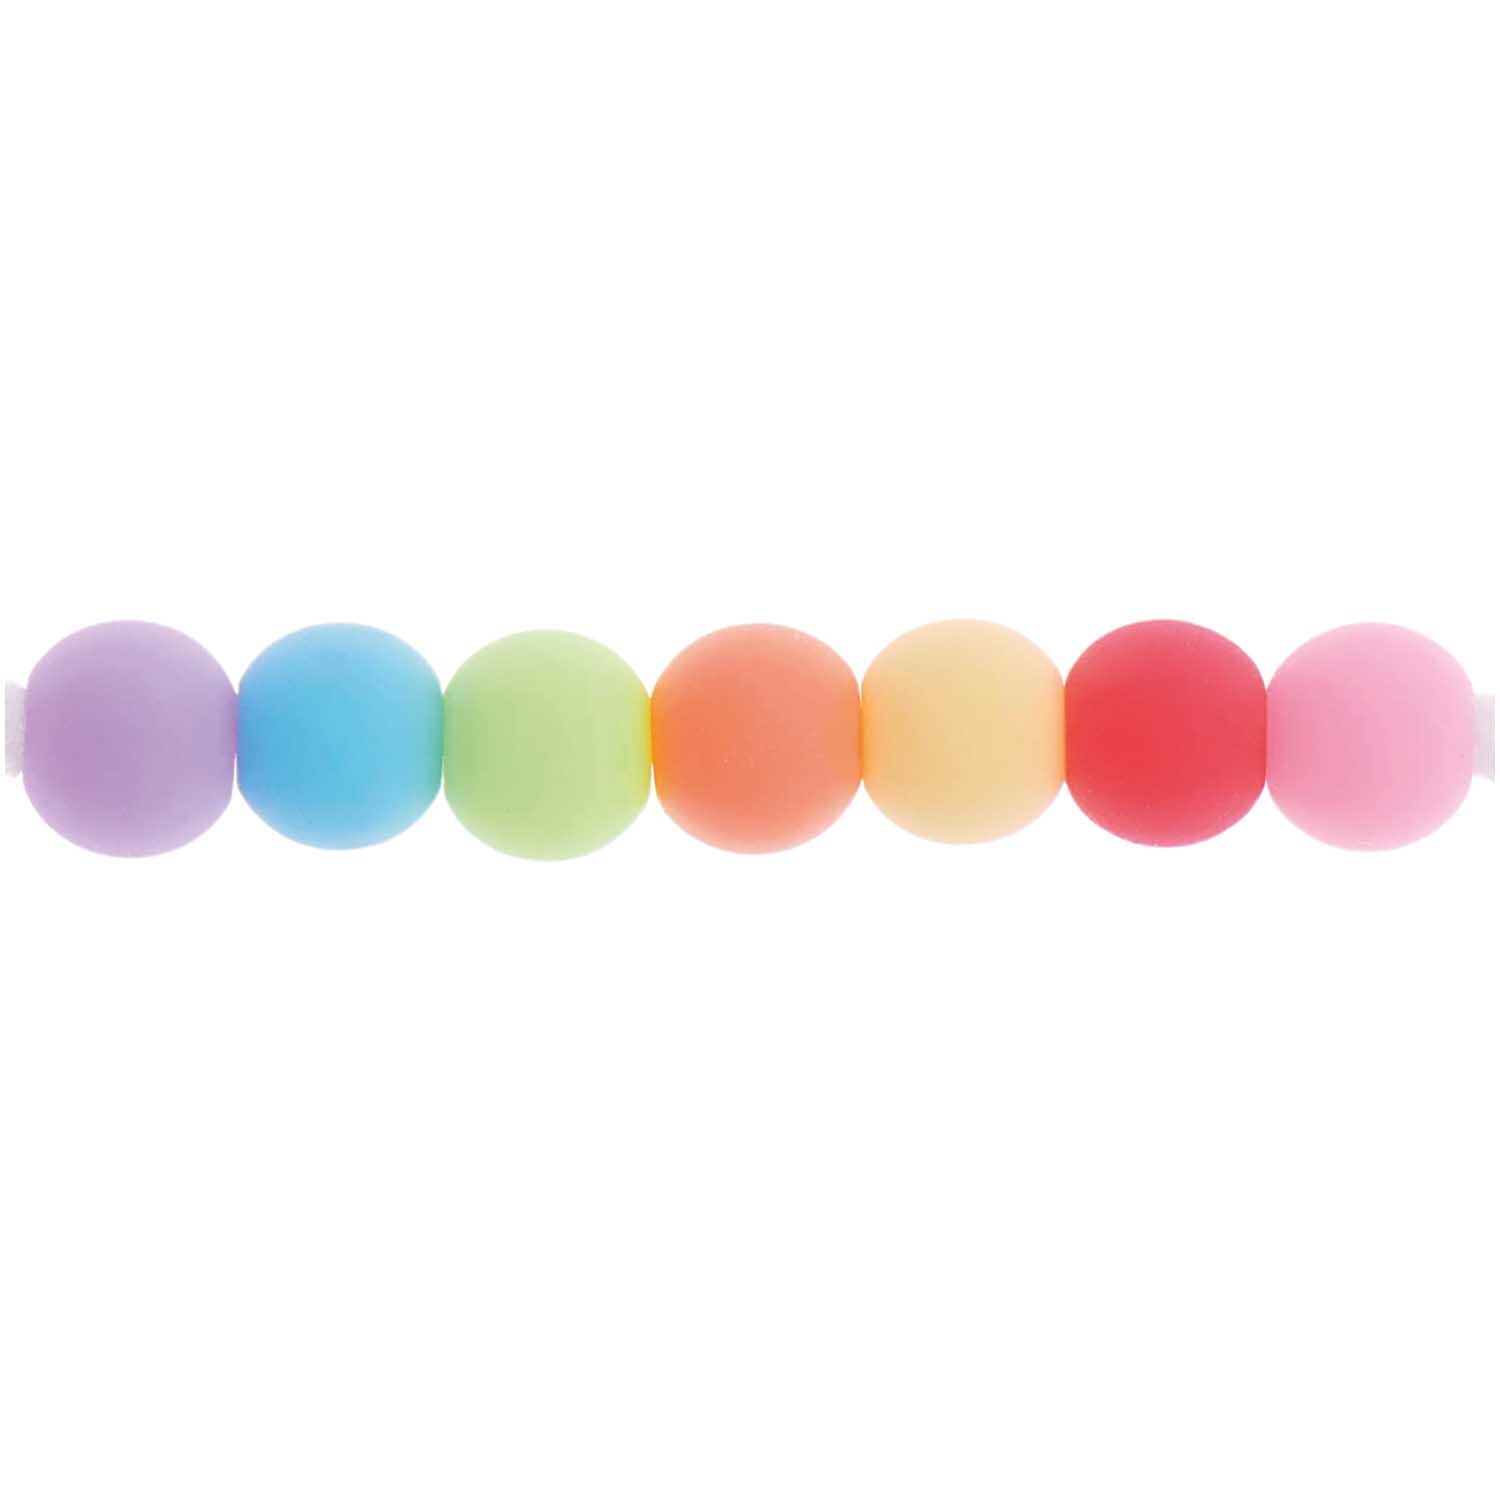 itoshii Kunststoffperlen Matt Rainbow/Pastell Mix